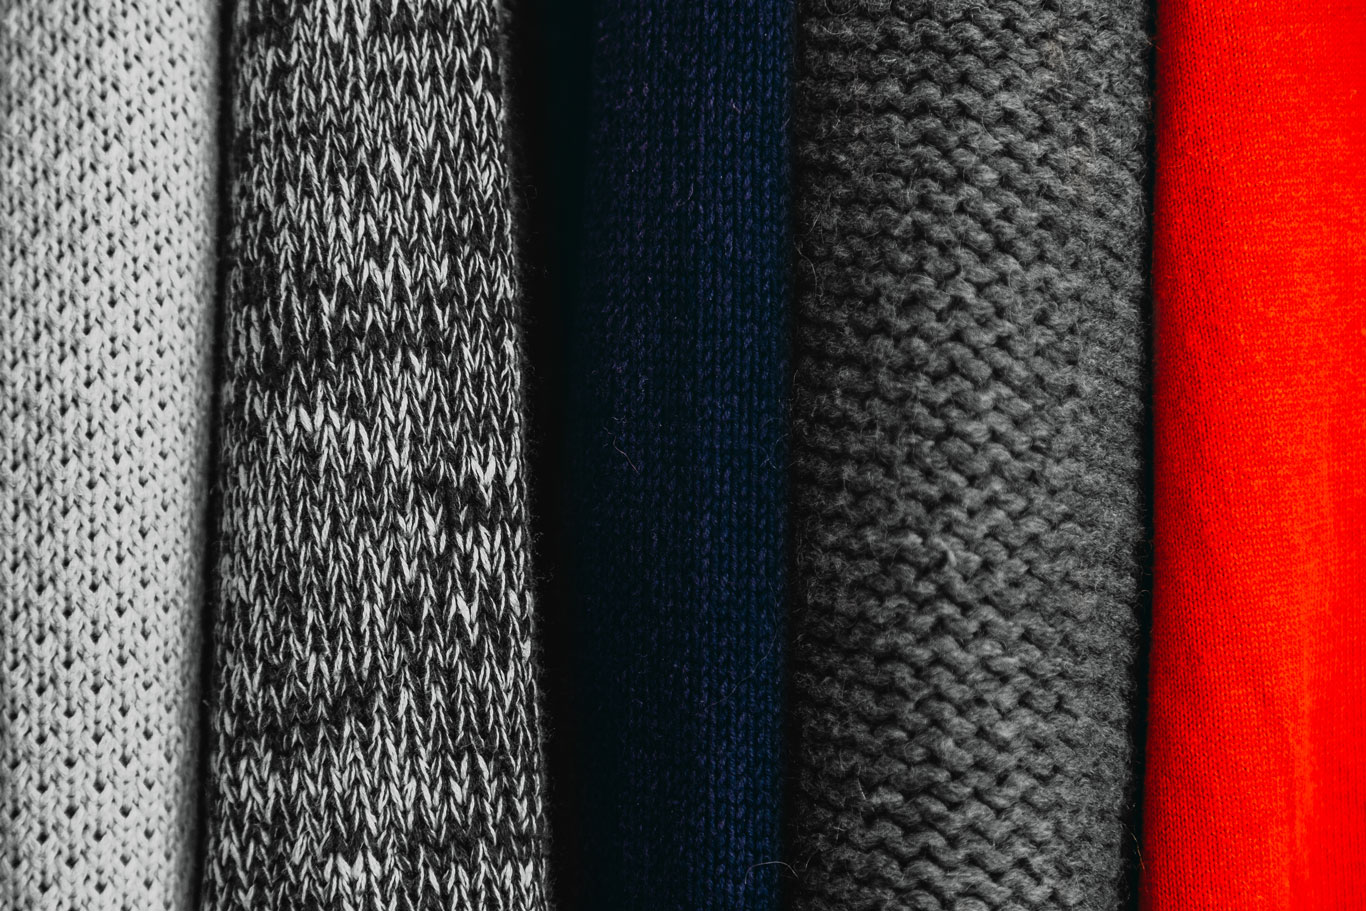 Sweater fabrics in a row.